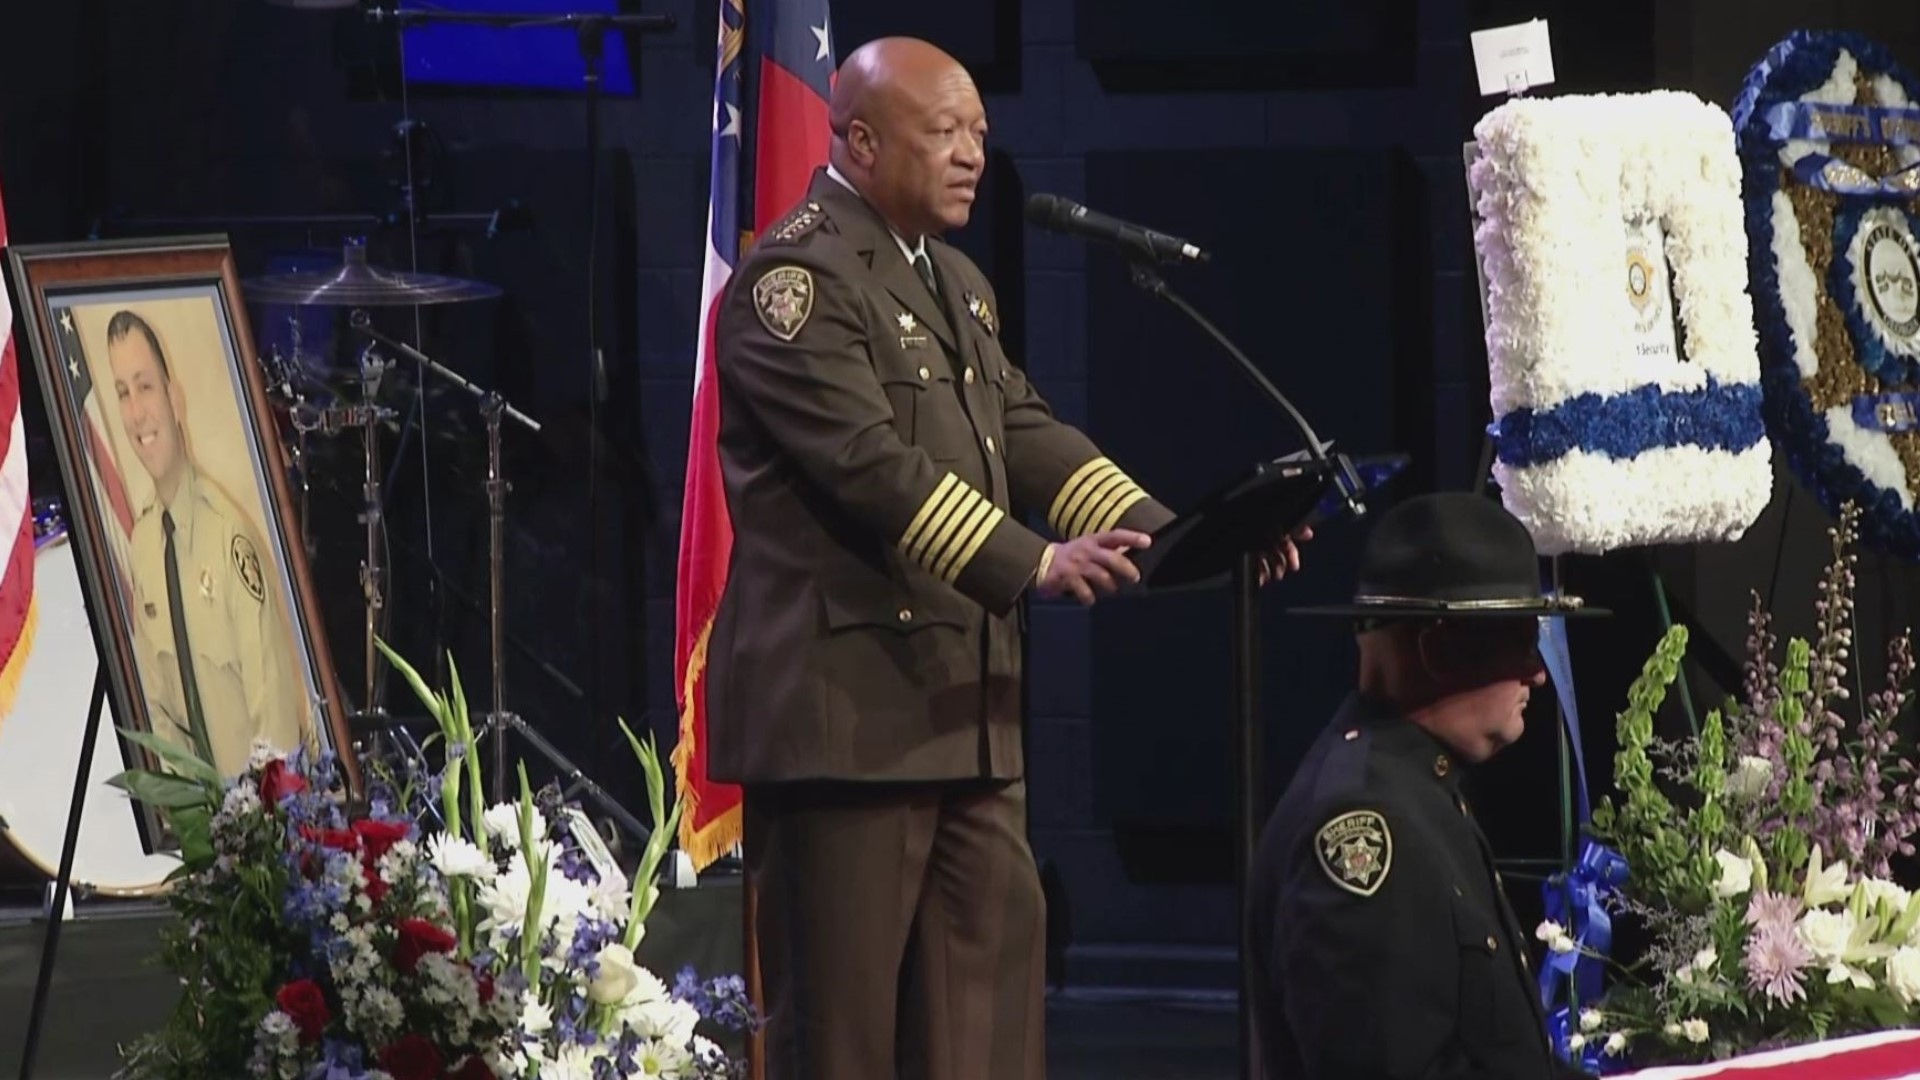 Cobb County Sheriff Craig D. Owens, Sr. speaks during the funeral for Deputy Jonathan Koleski.